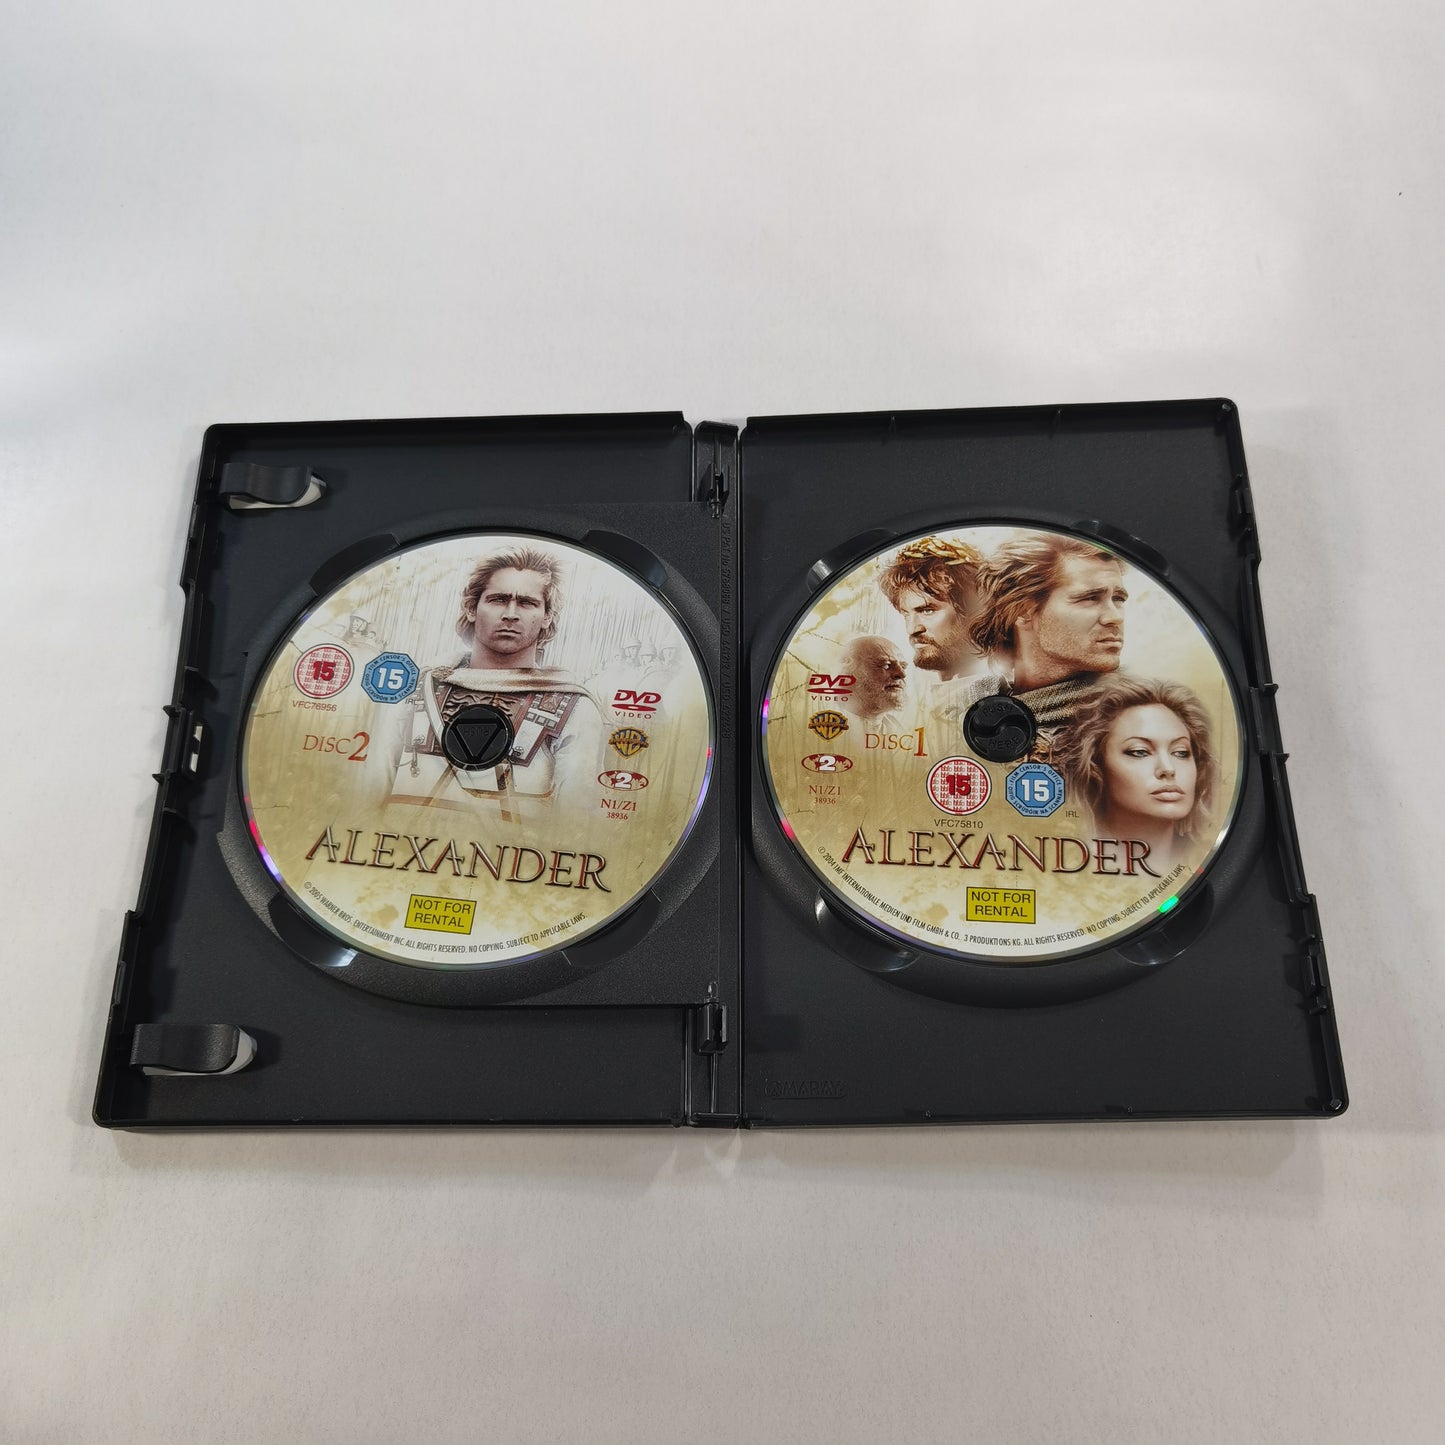 Alexander (2004) - DVD UK 2005 2-Disc Special Edition